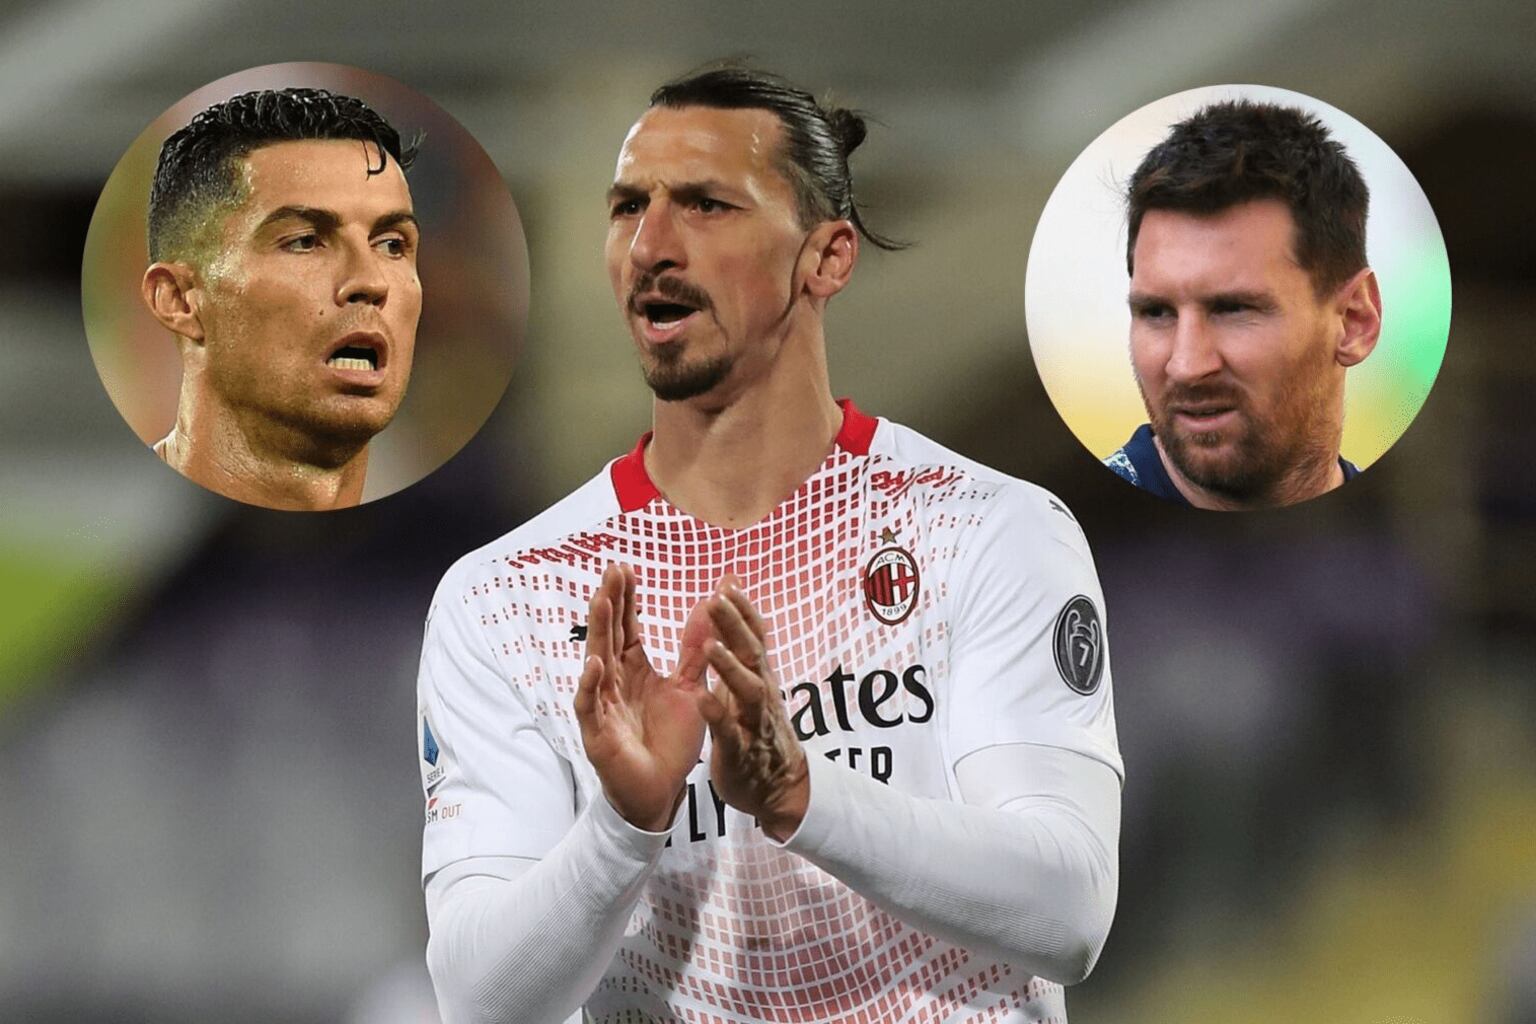 Neither Messi nor Cristiano Ronaldo, Ibrahimovic chooses the king of soccer